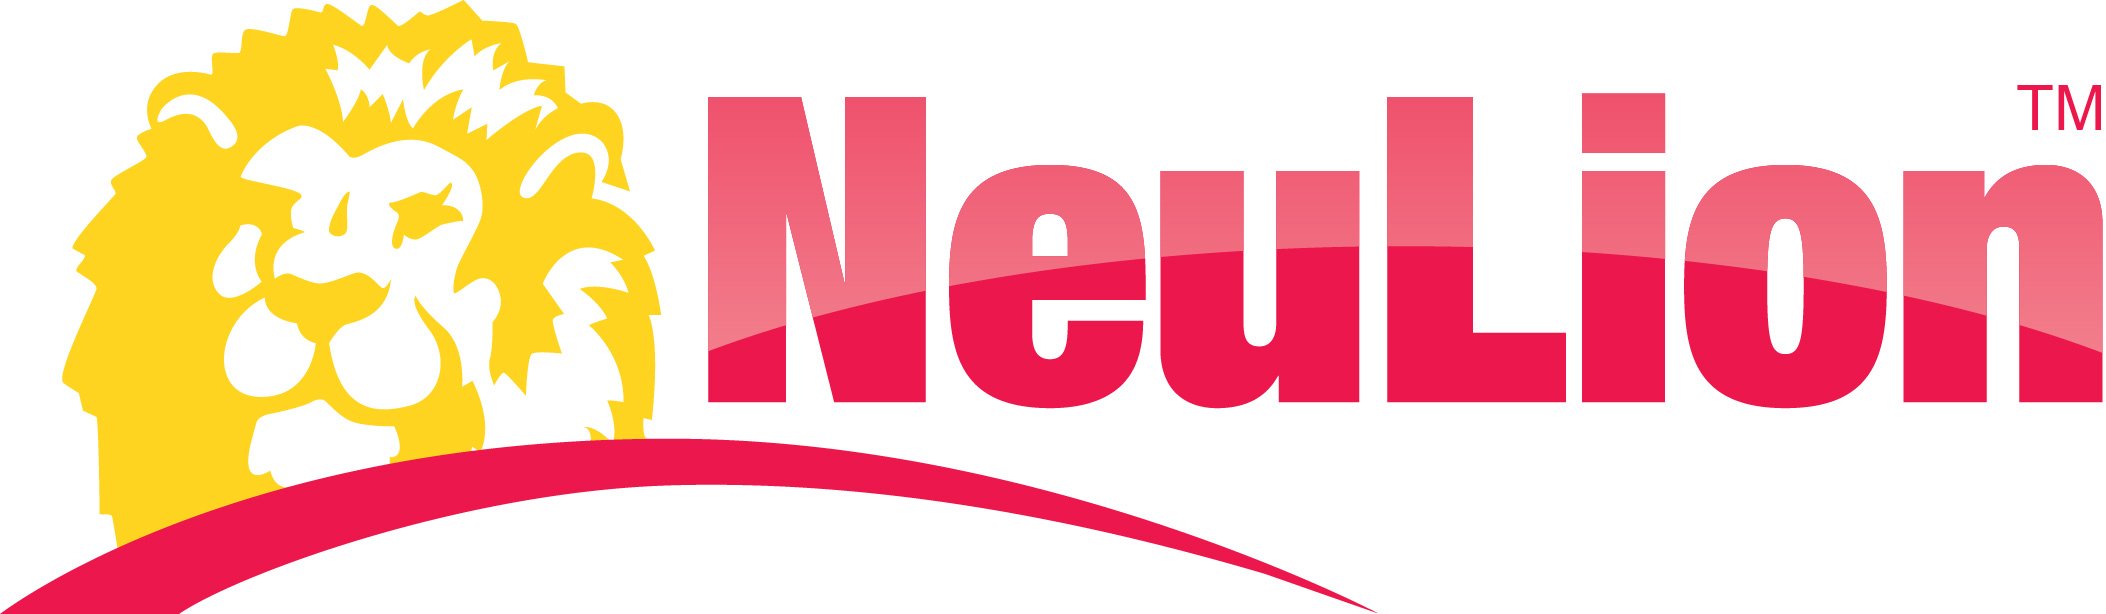 NLN stock logo